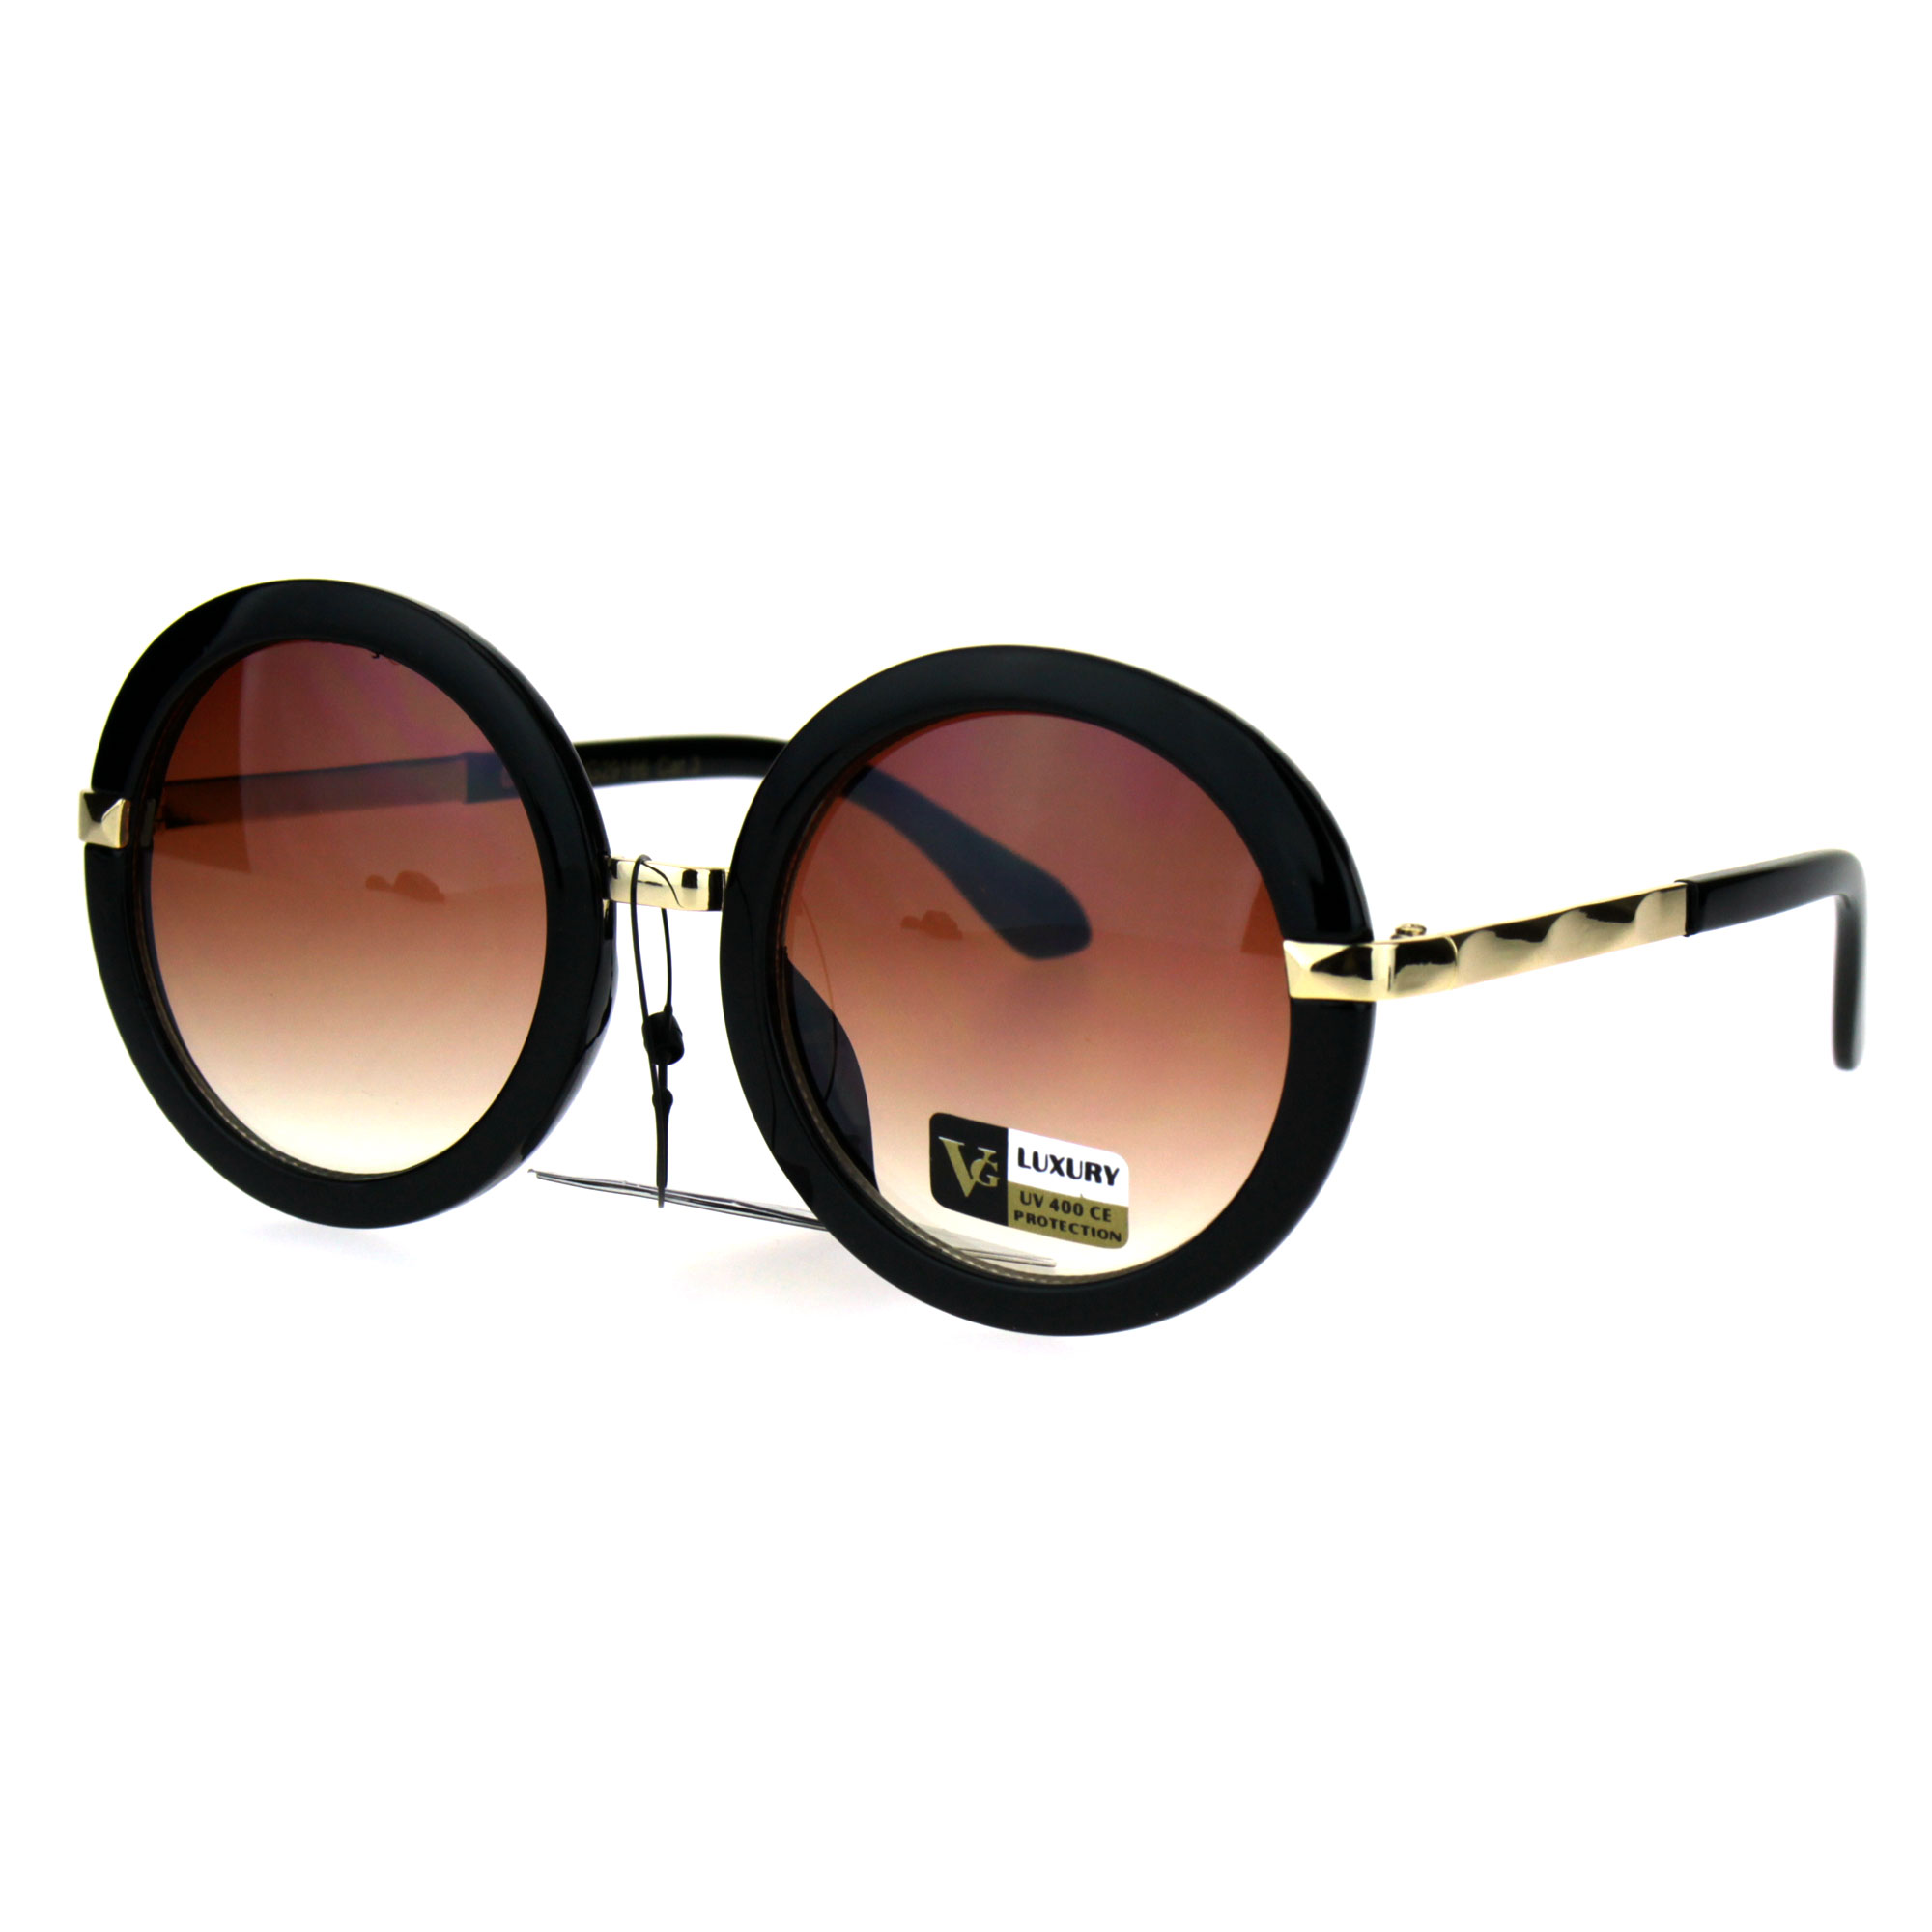 Womens Double Metal Plastic Frame Round Designer Fashion Diva Sunglasses Black Burgundy - image 1 of 4